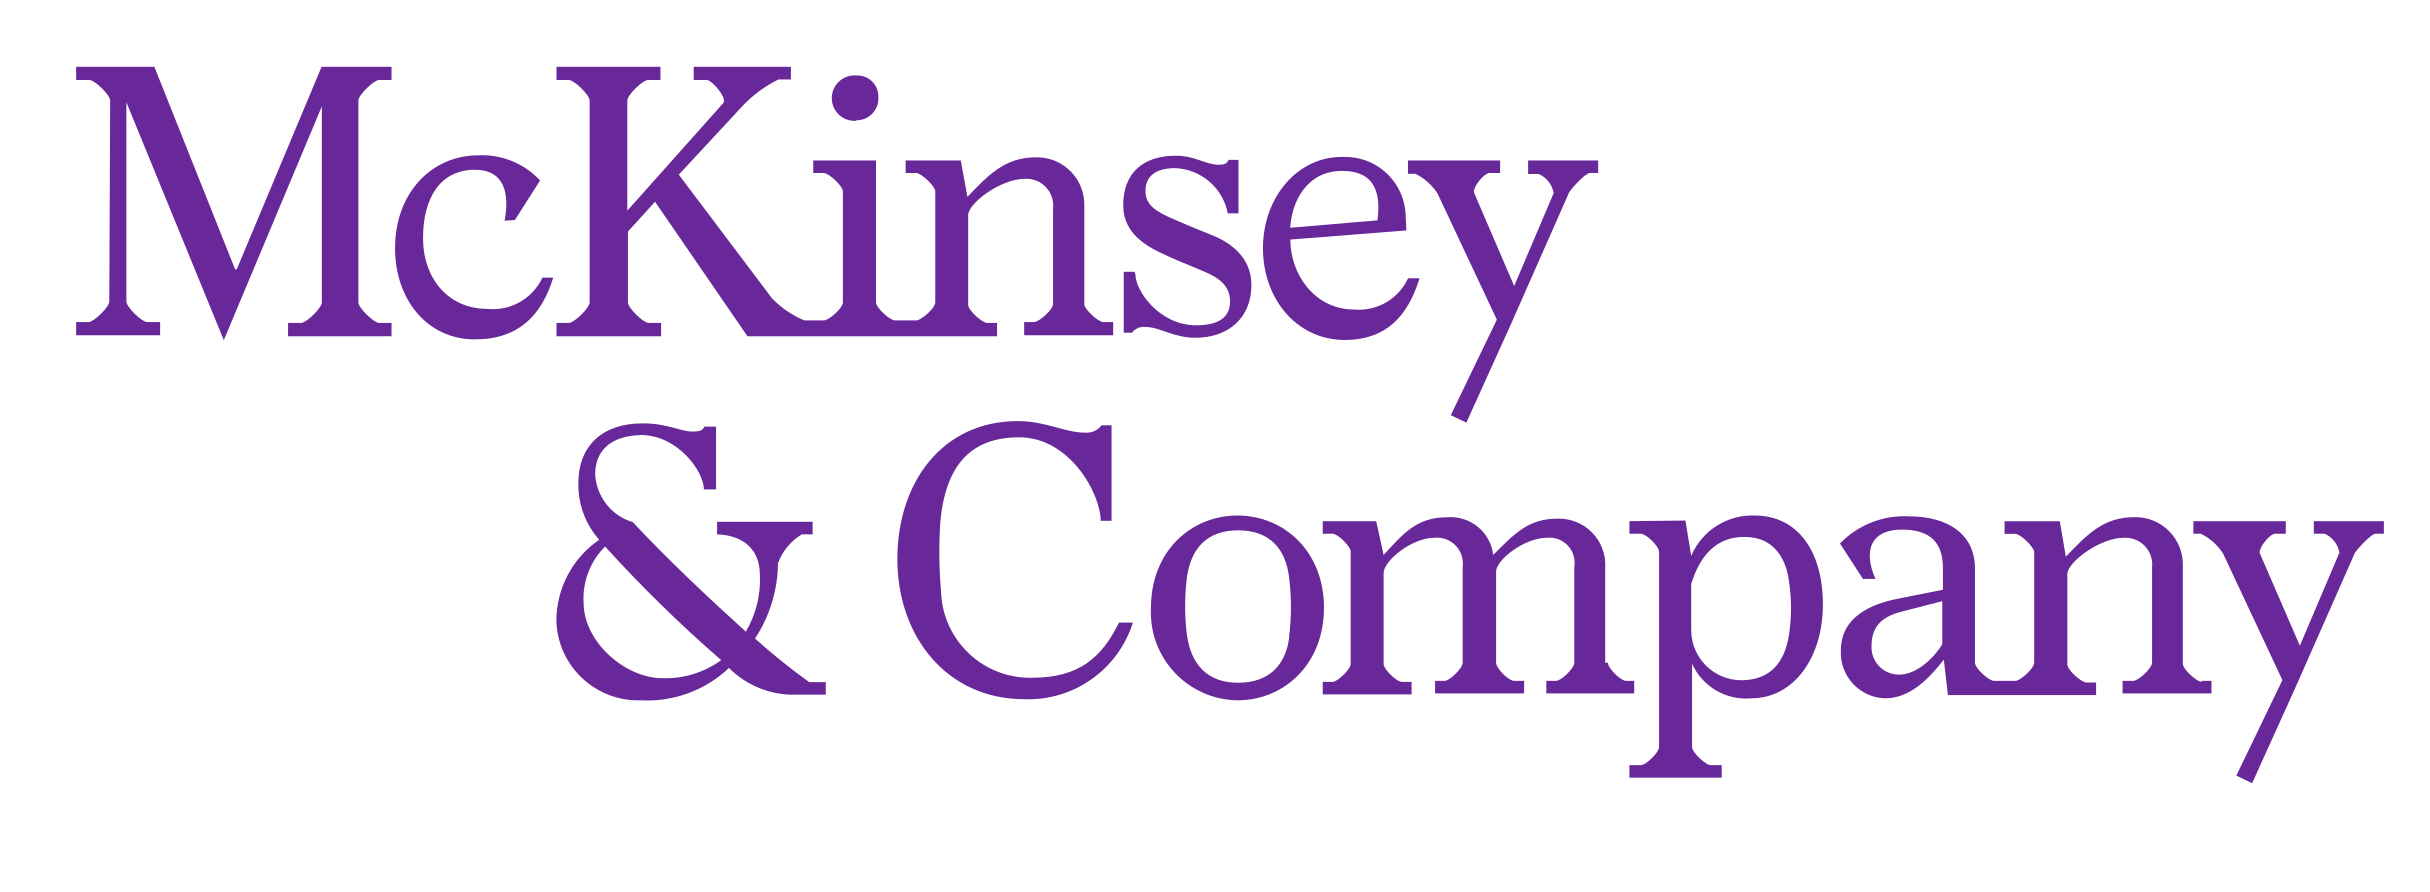 McKinsey_Company_p